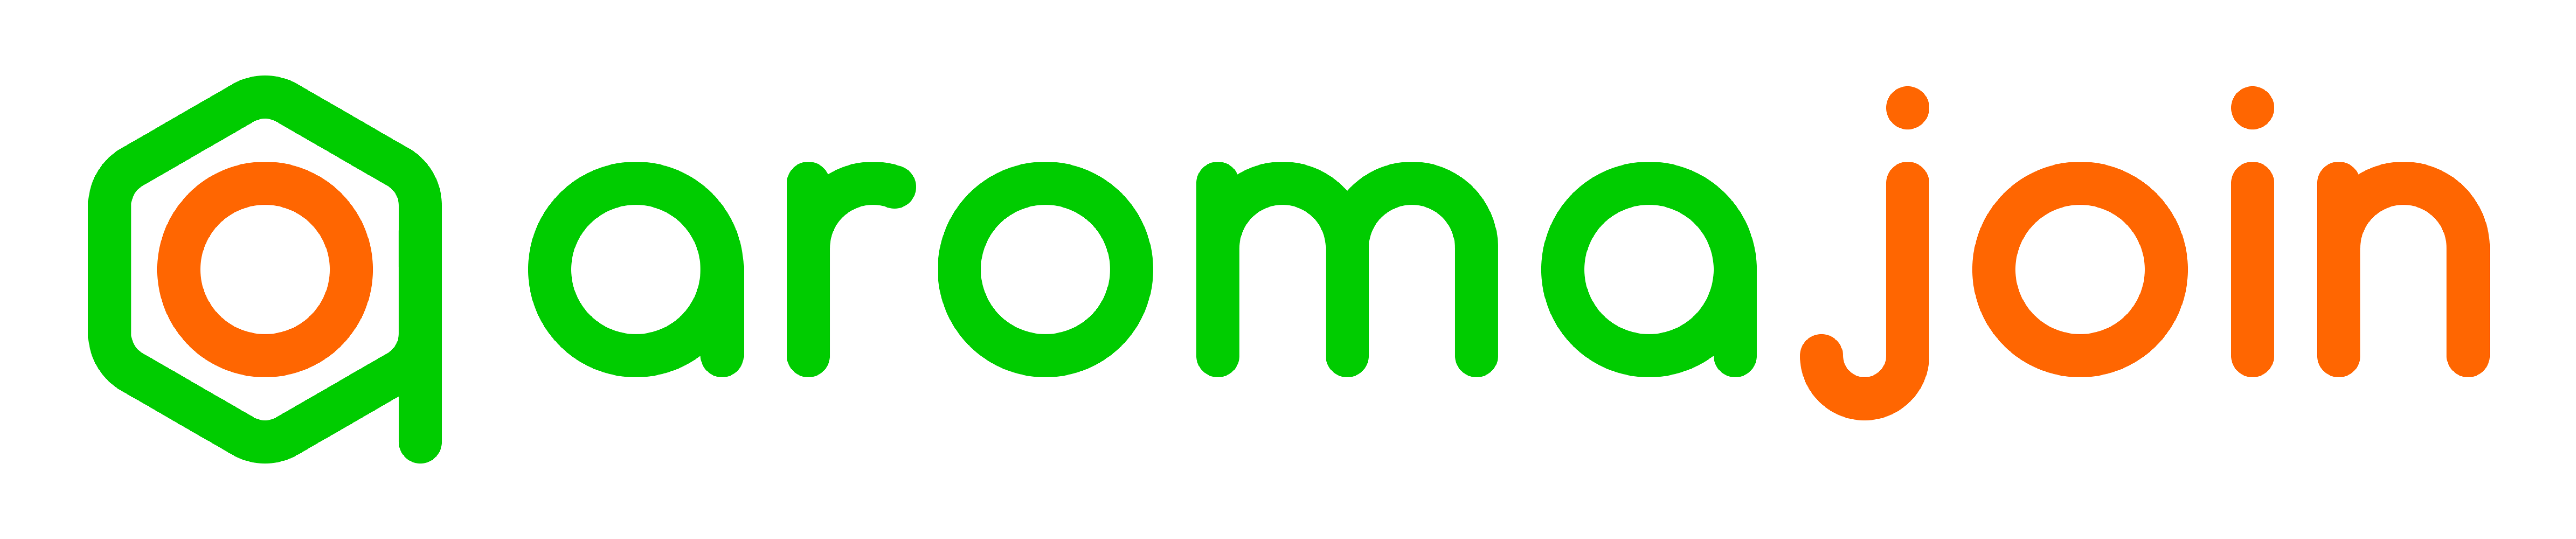 Aromajoin Corporation Logo